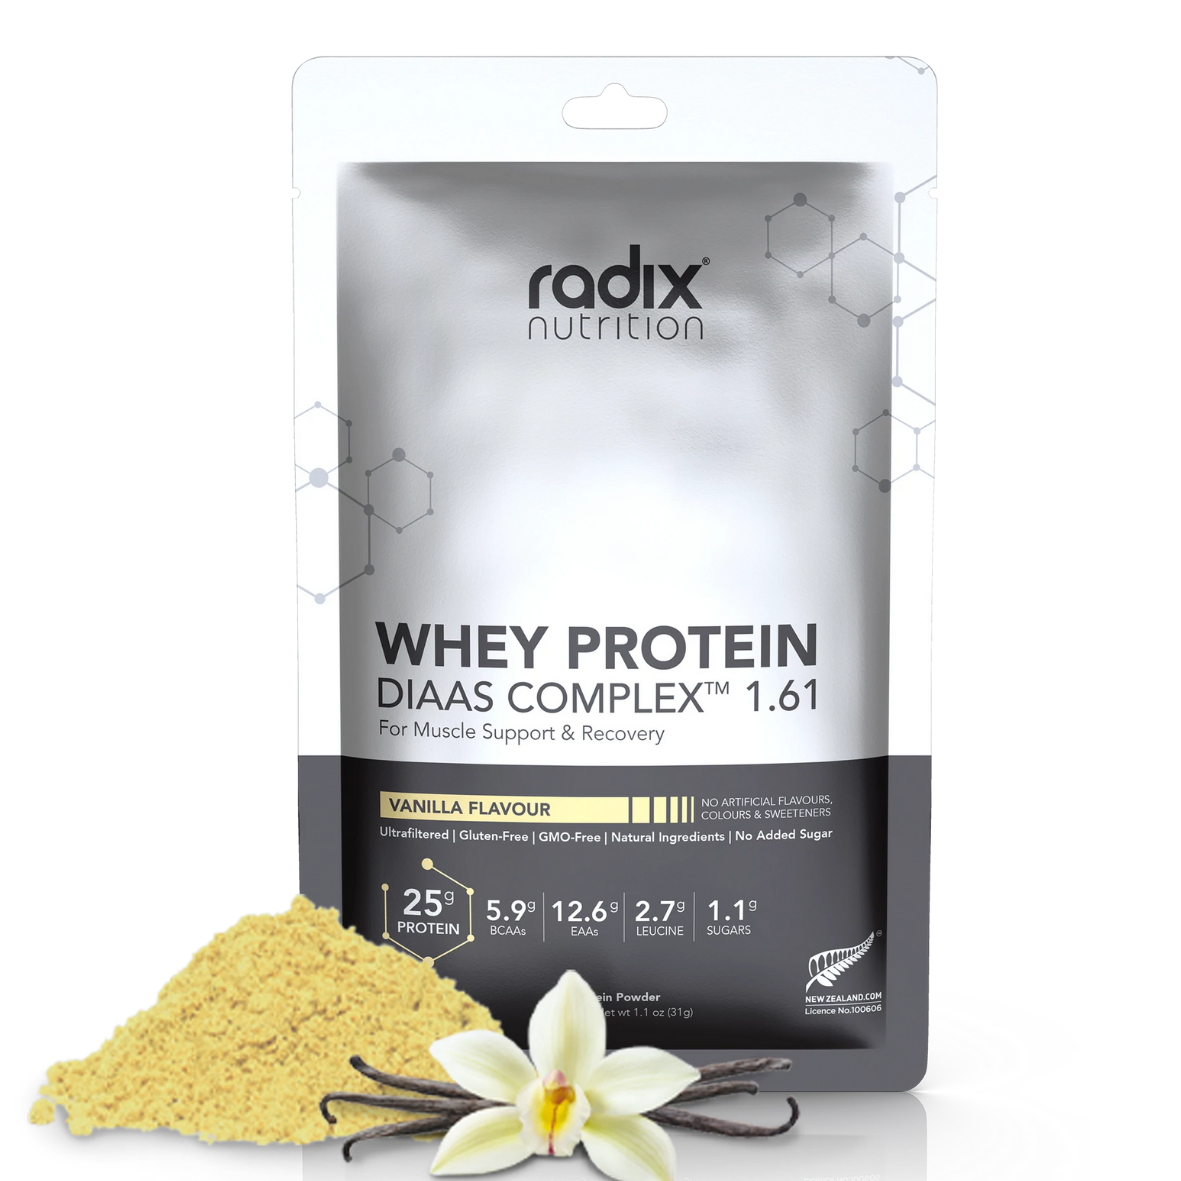 Radix Nutrition Whey Protein 1.61 vanilla flavour